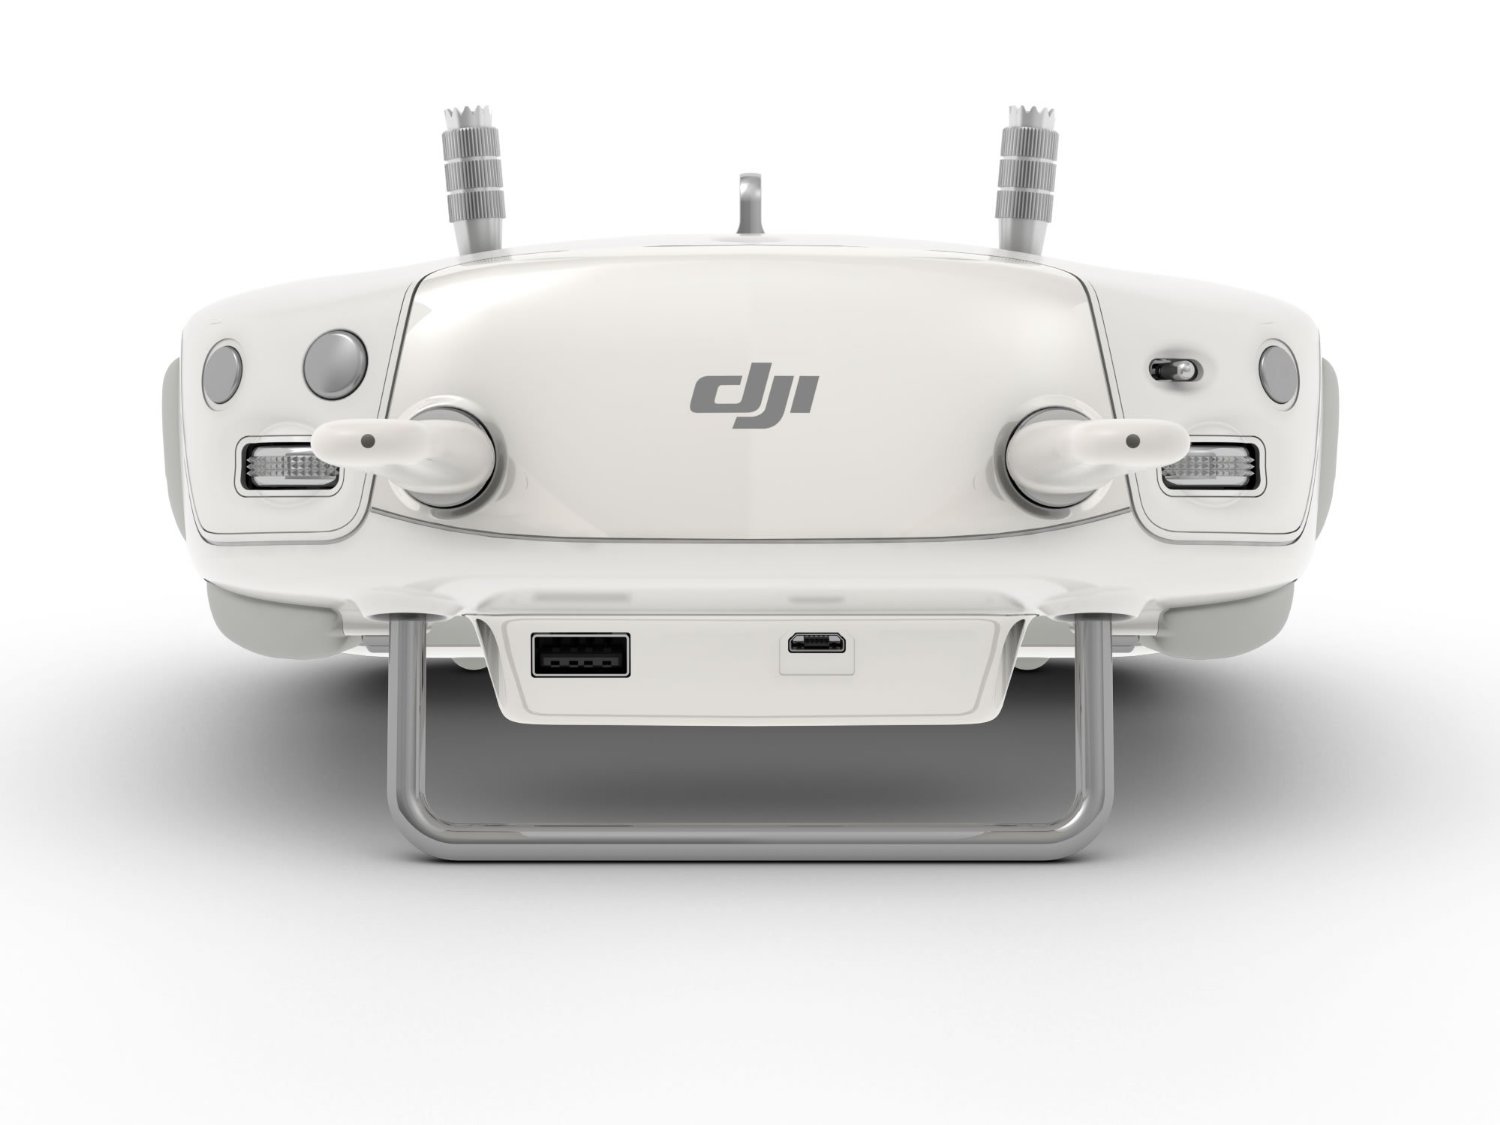 DJI Phantom 3 Advanced Quadcopter Drone with 2.7K Ultra HD Video ...